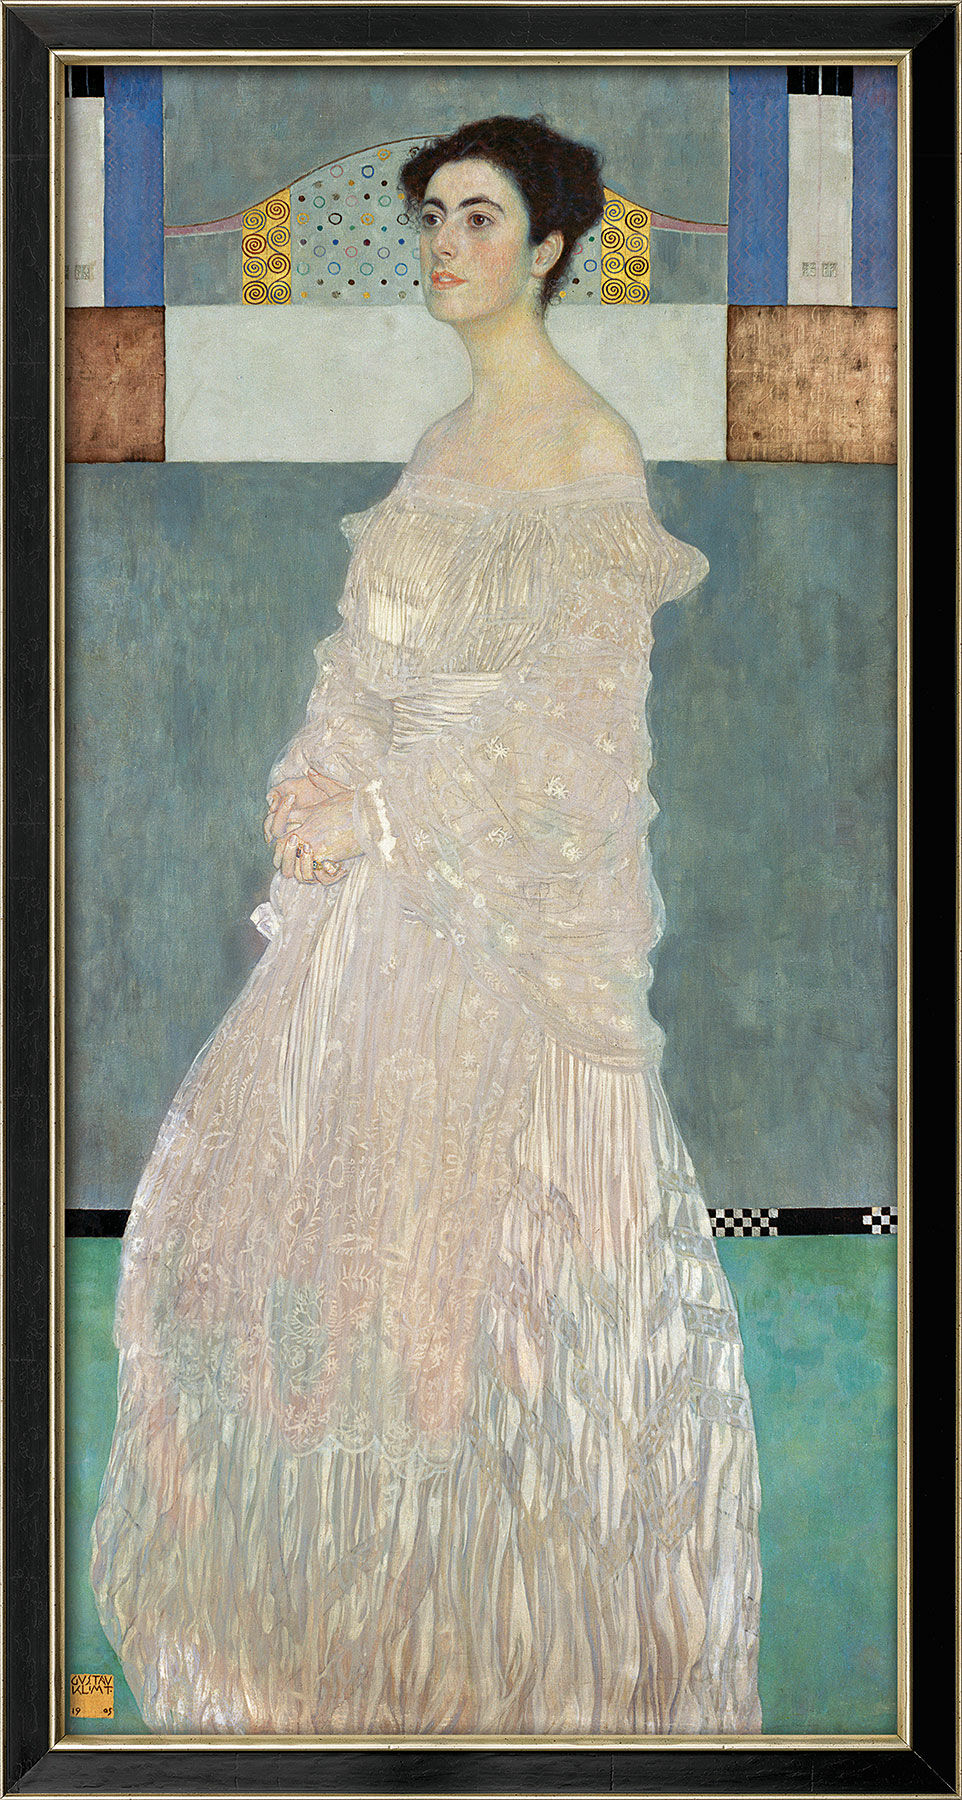 Picture "Margarethe Stonborough-Wittgenstein" (1905), framed by Gustav Klimt